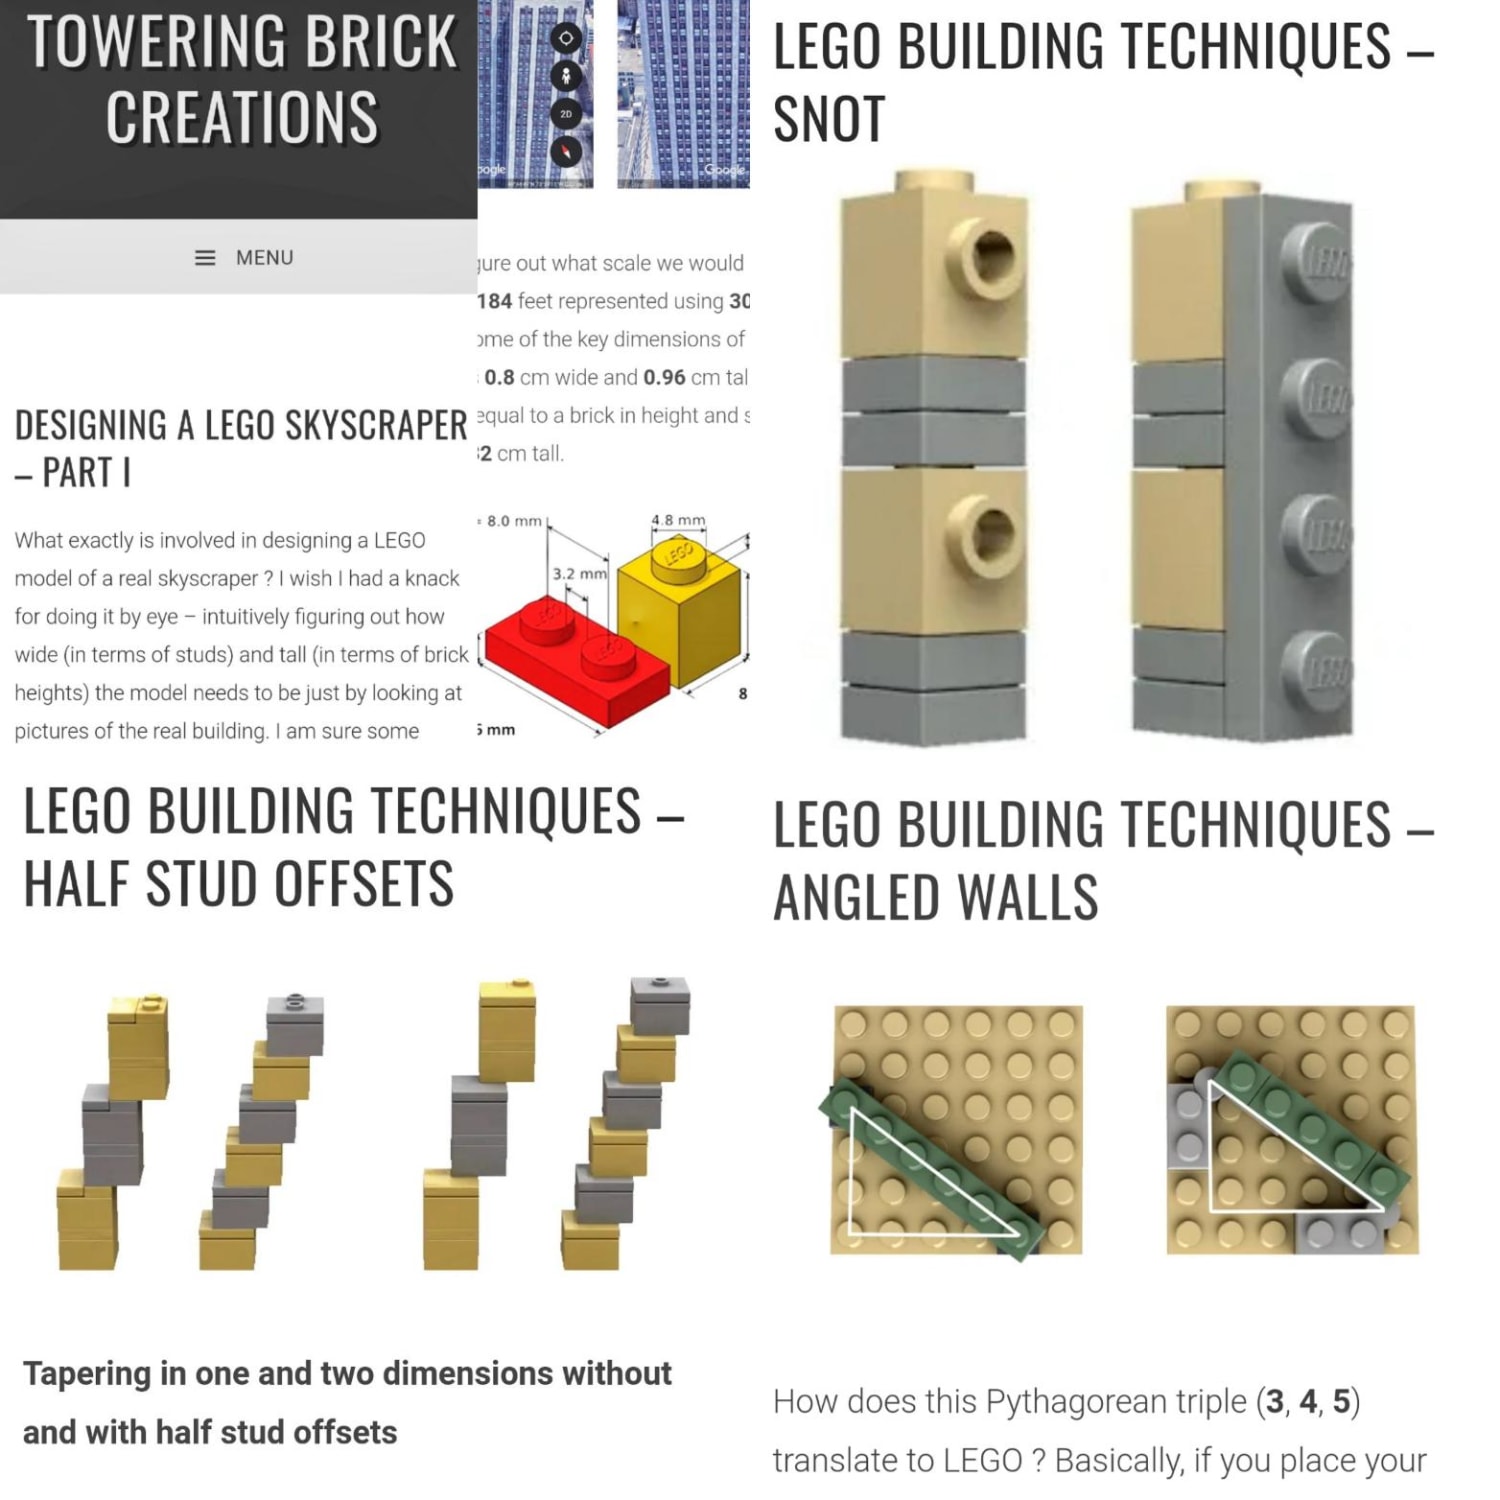 New blog discussing various building techniques